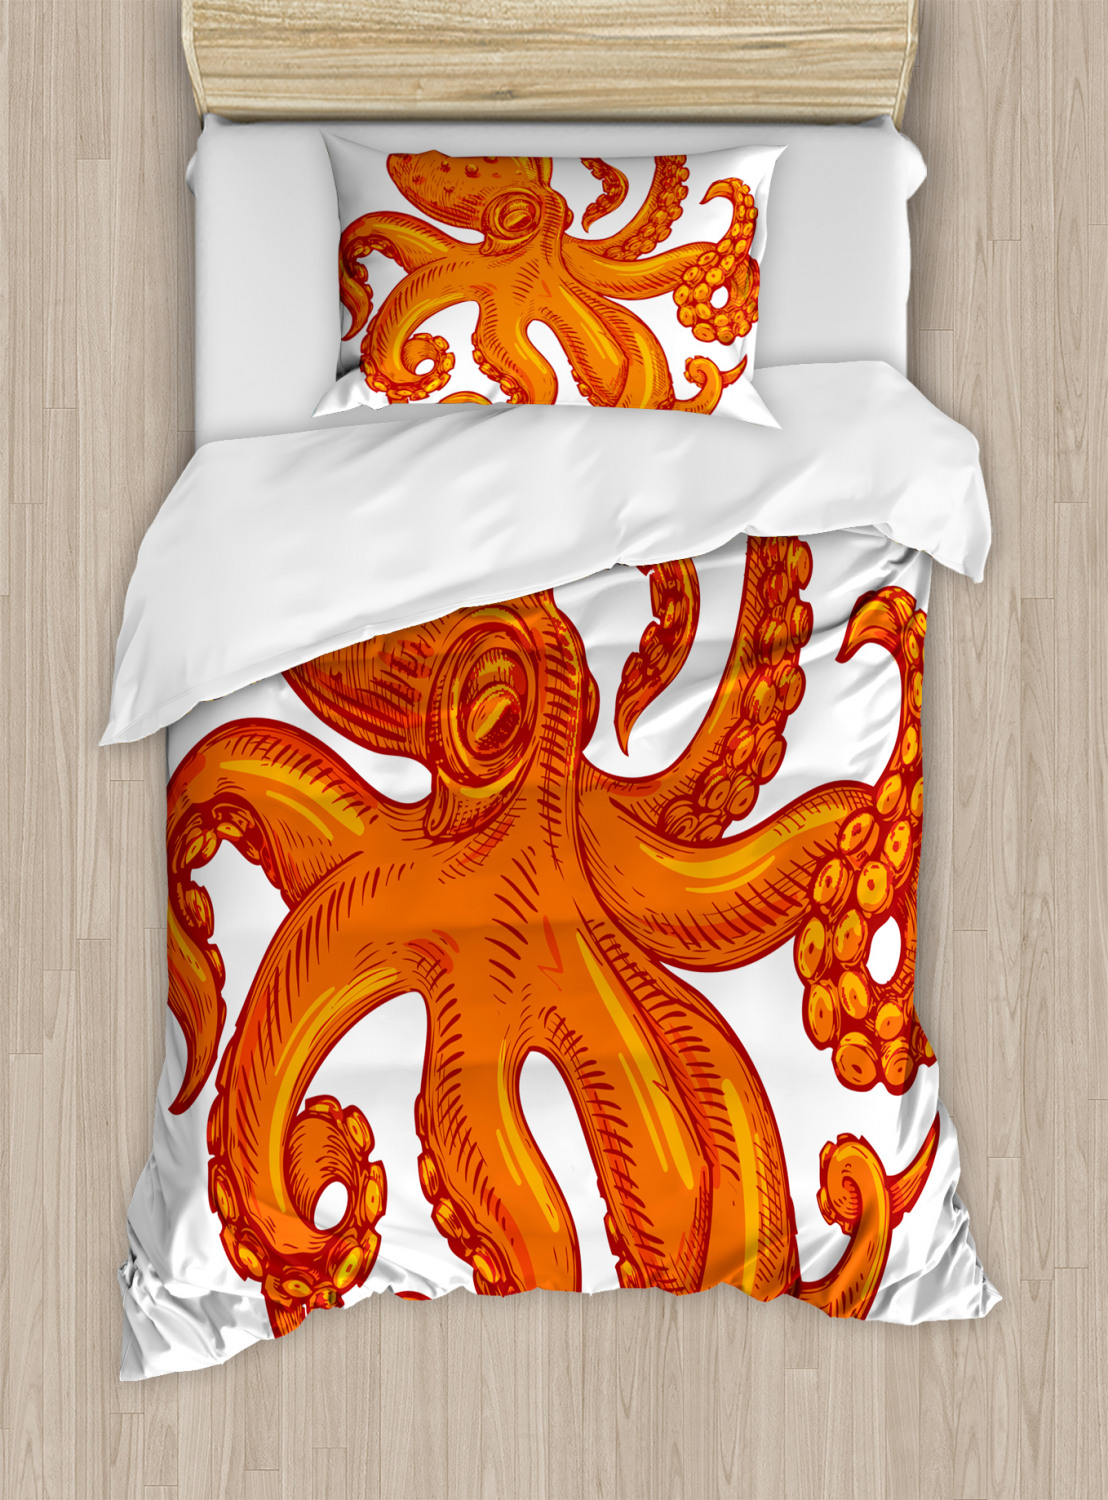 Octopus Quilted Coverlet & Pillow Shams Set Orange Animal Wildlife Print 